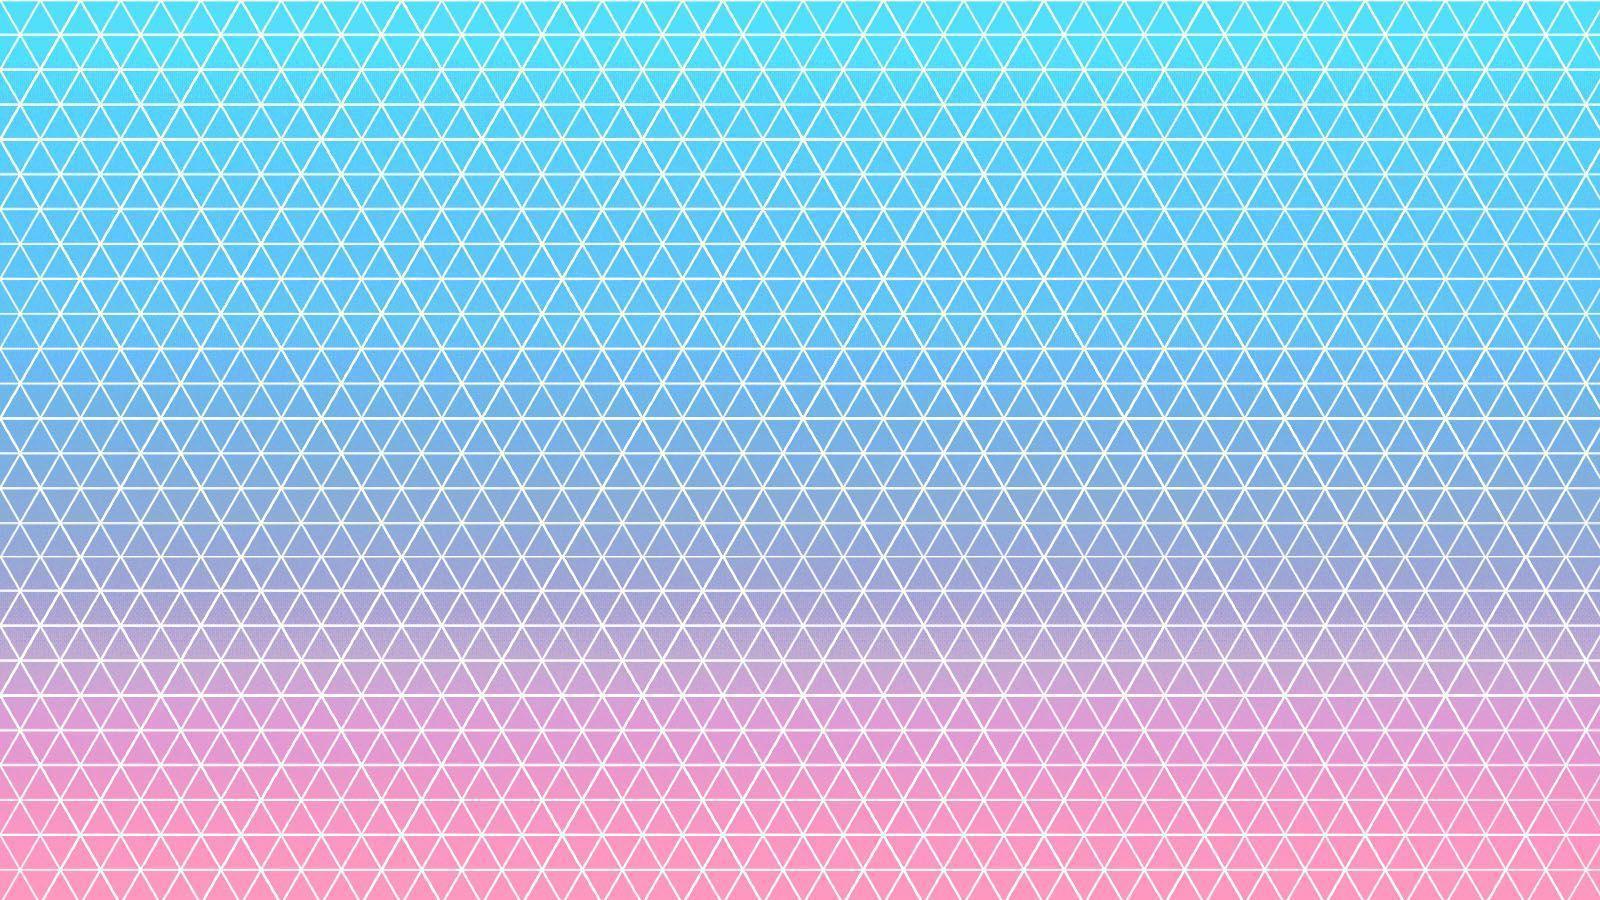 Pastel Blue Aesthetic Tumblr Desktop Wallpapers